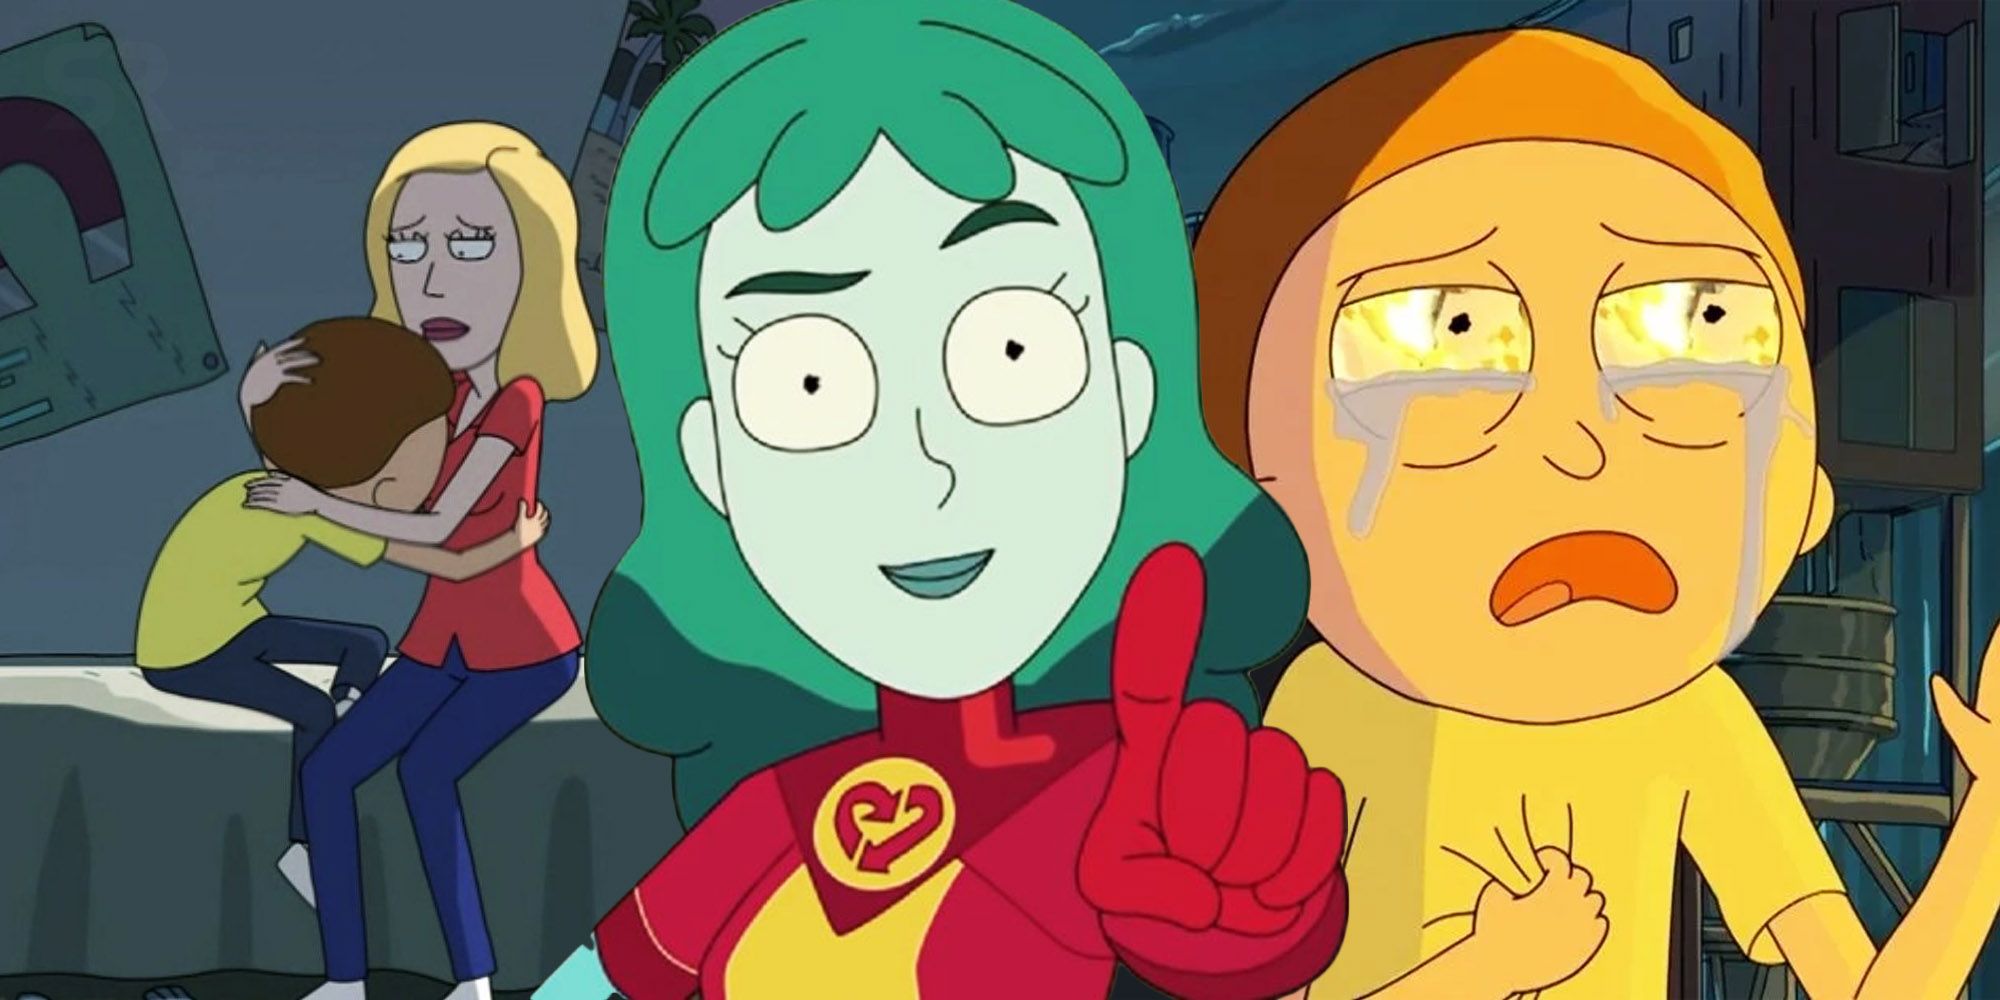 Image showing Beth comforting Morty, Planetina smiling, and Morty crying